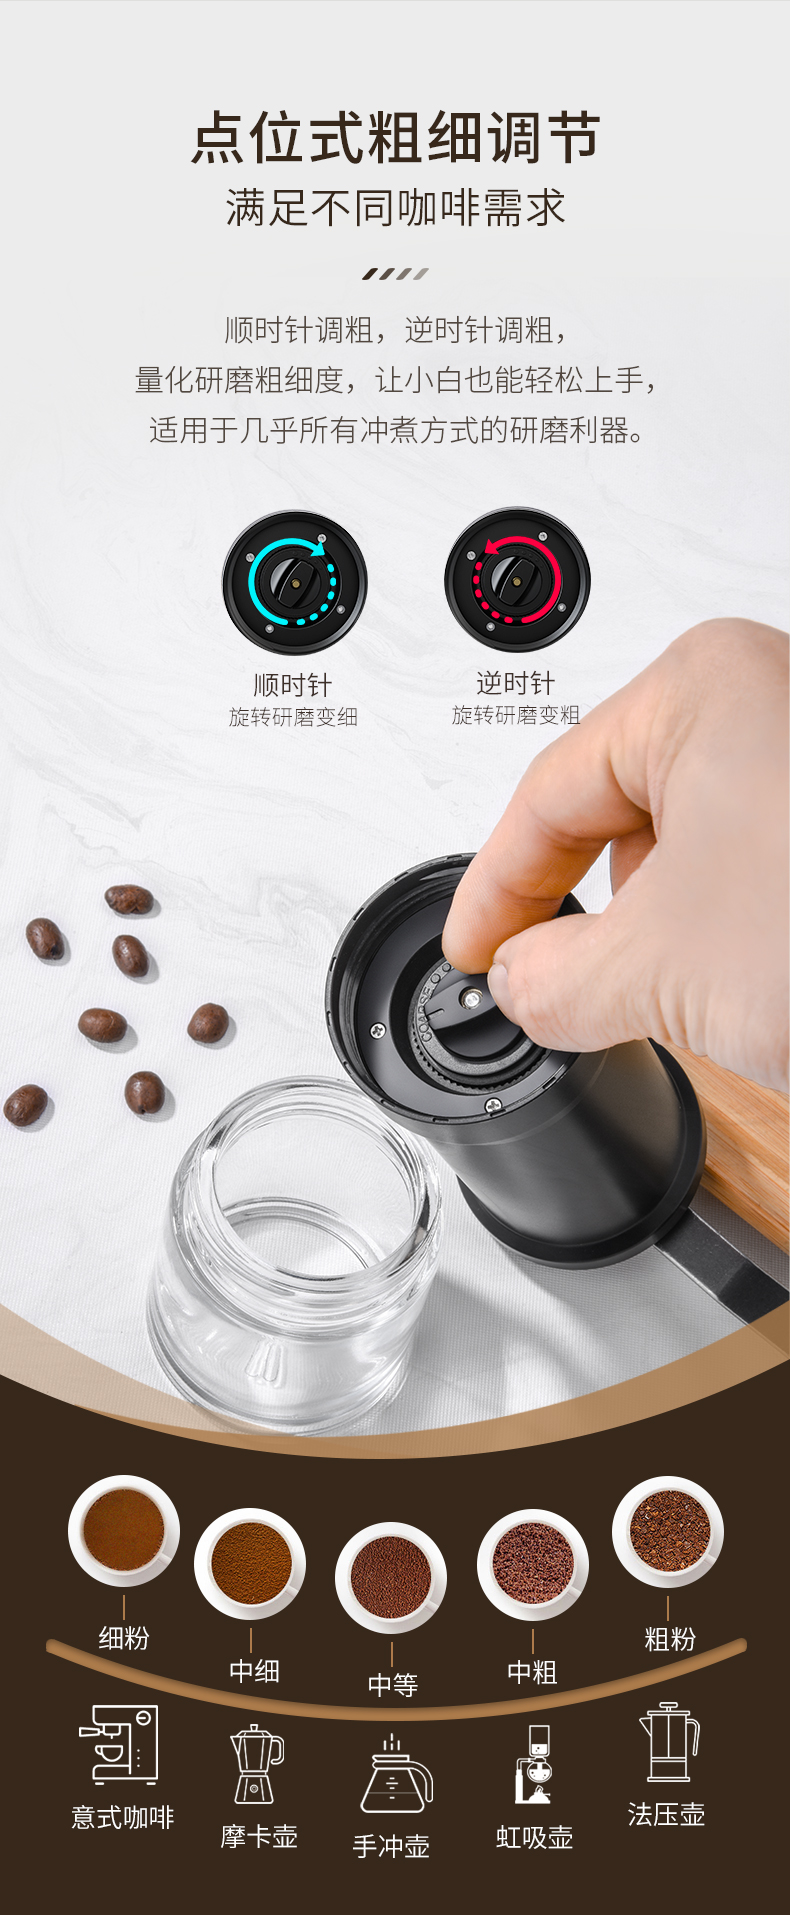 Cliton KMDJ-D手摇咖啡磨豆机套装